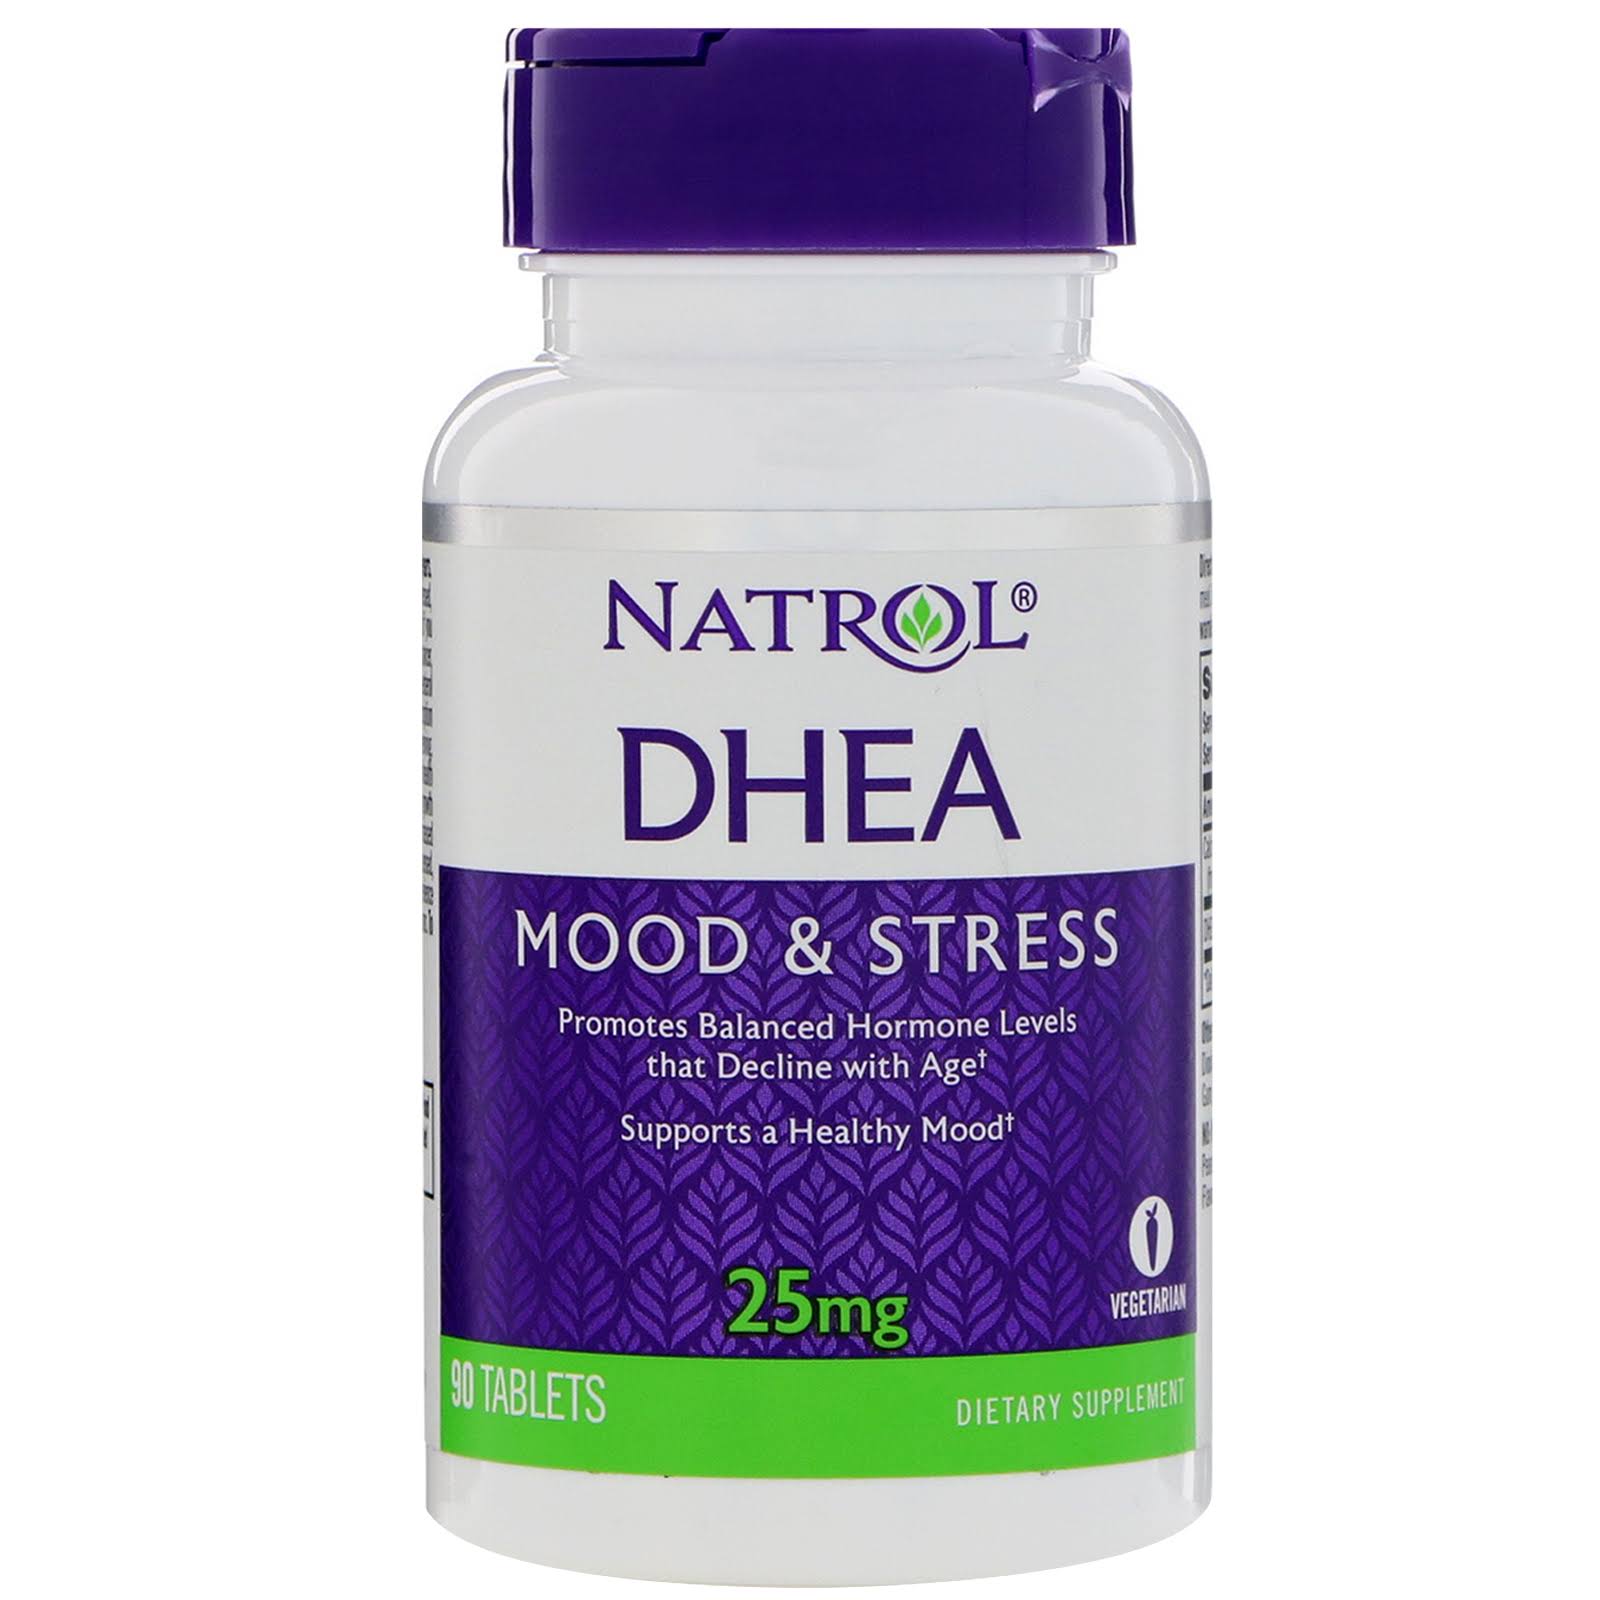 Natrol DHEA Supplement - Orange, 25mg, 30ct